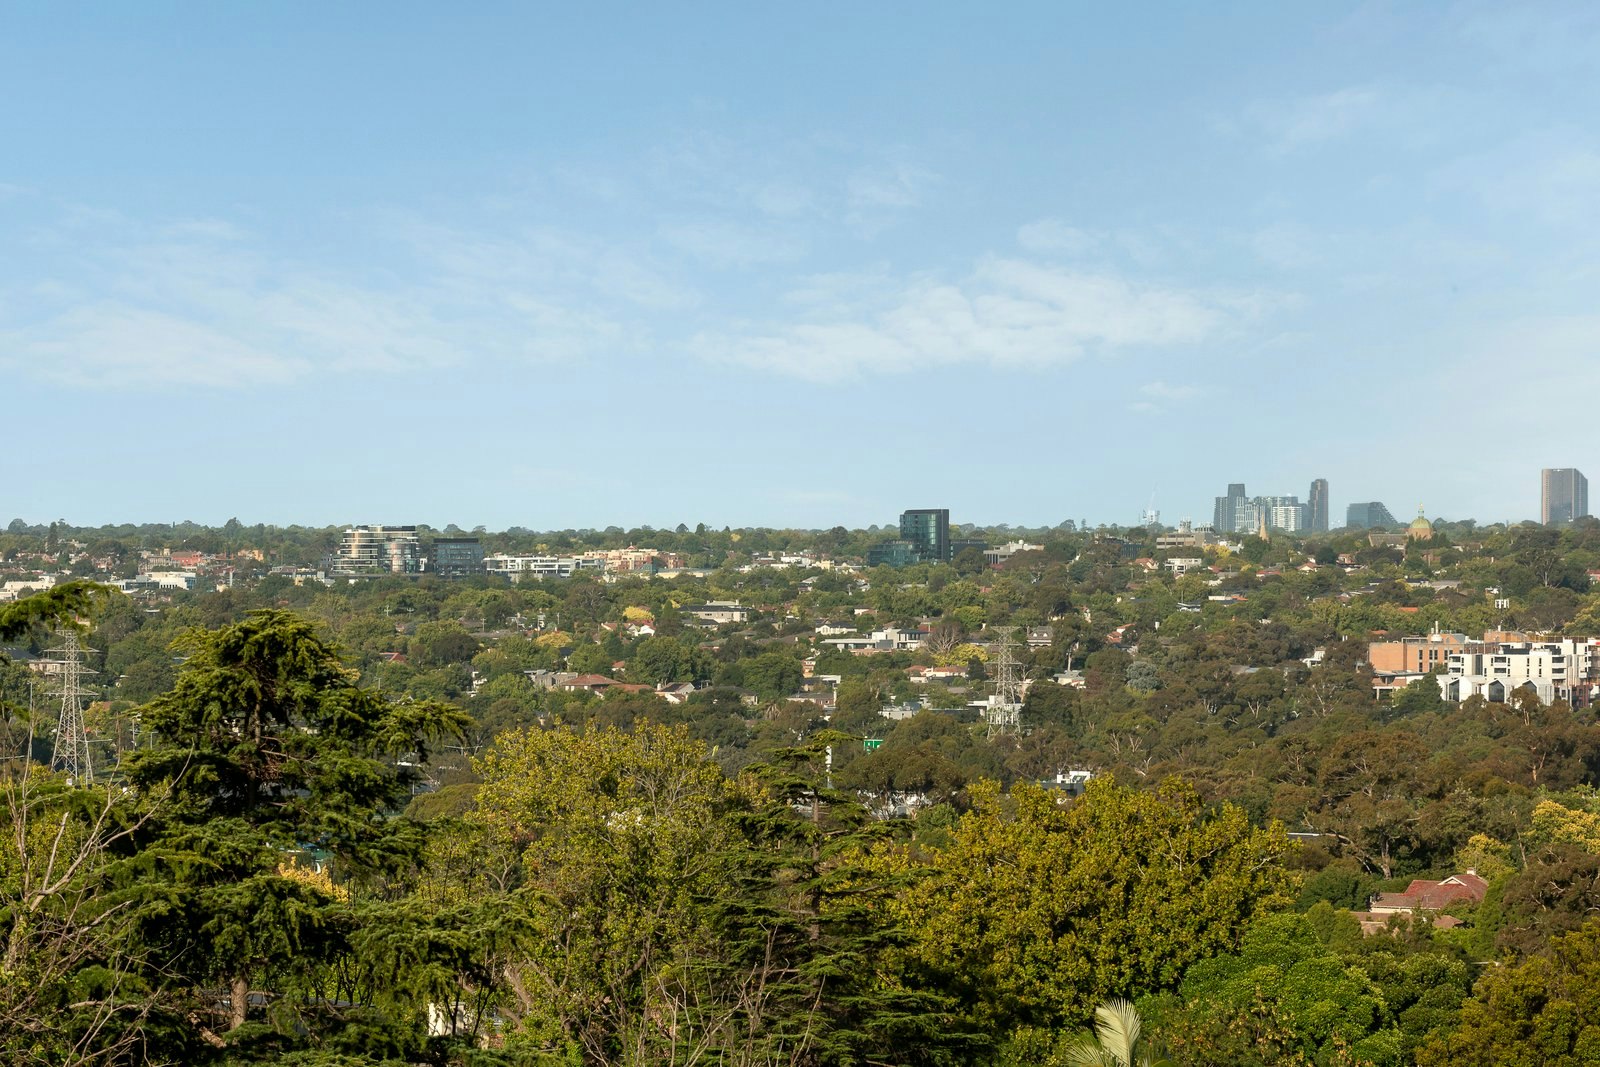 Image of cityscape